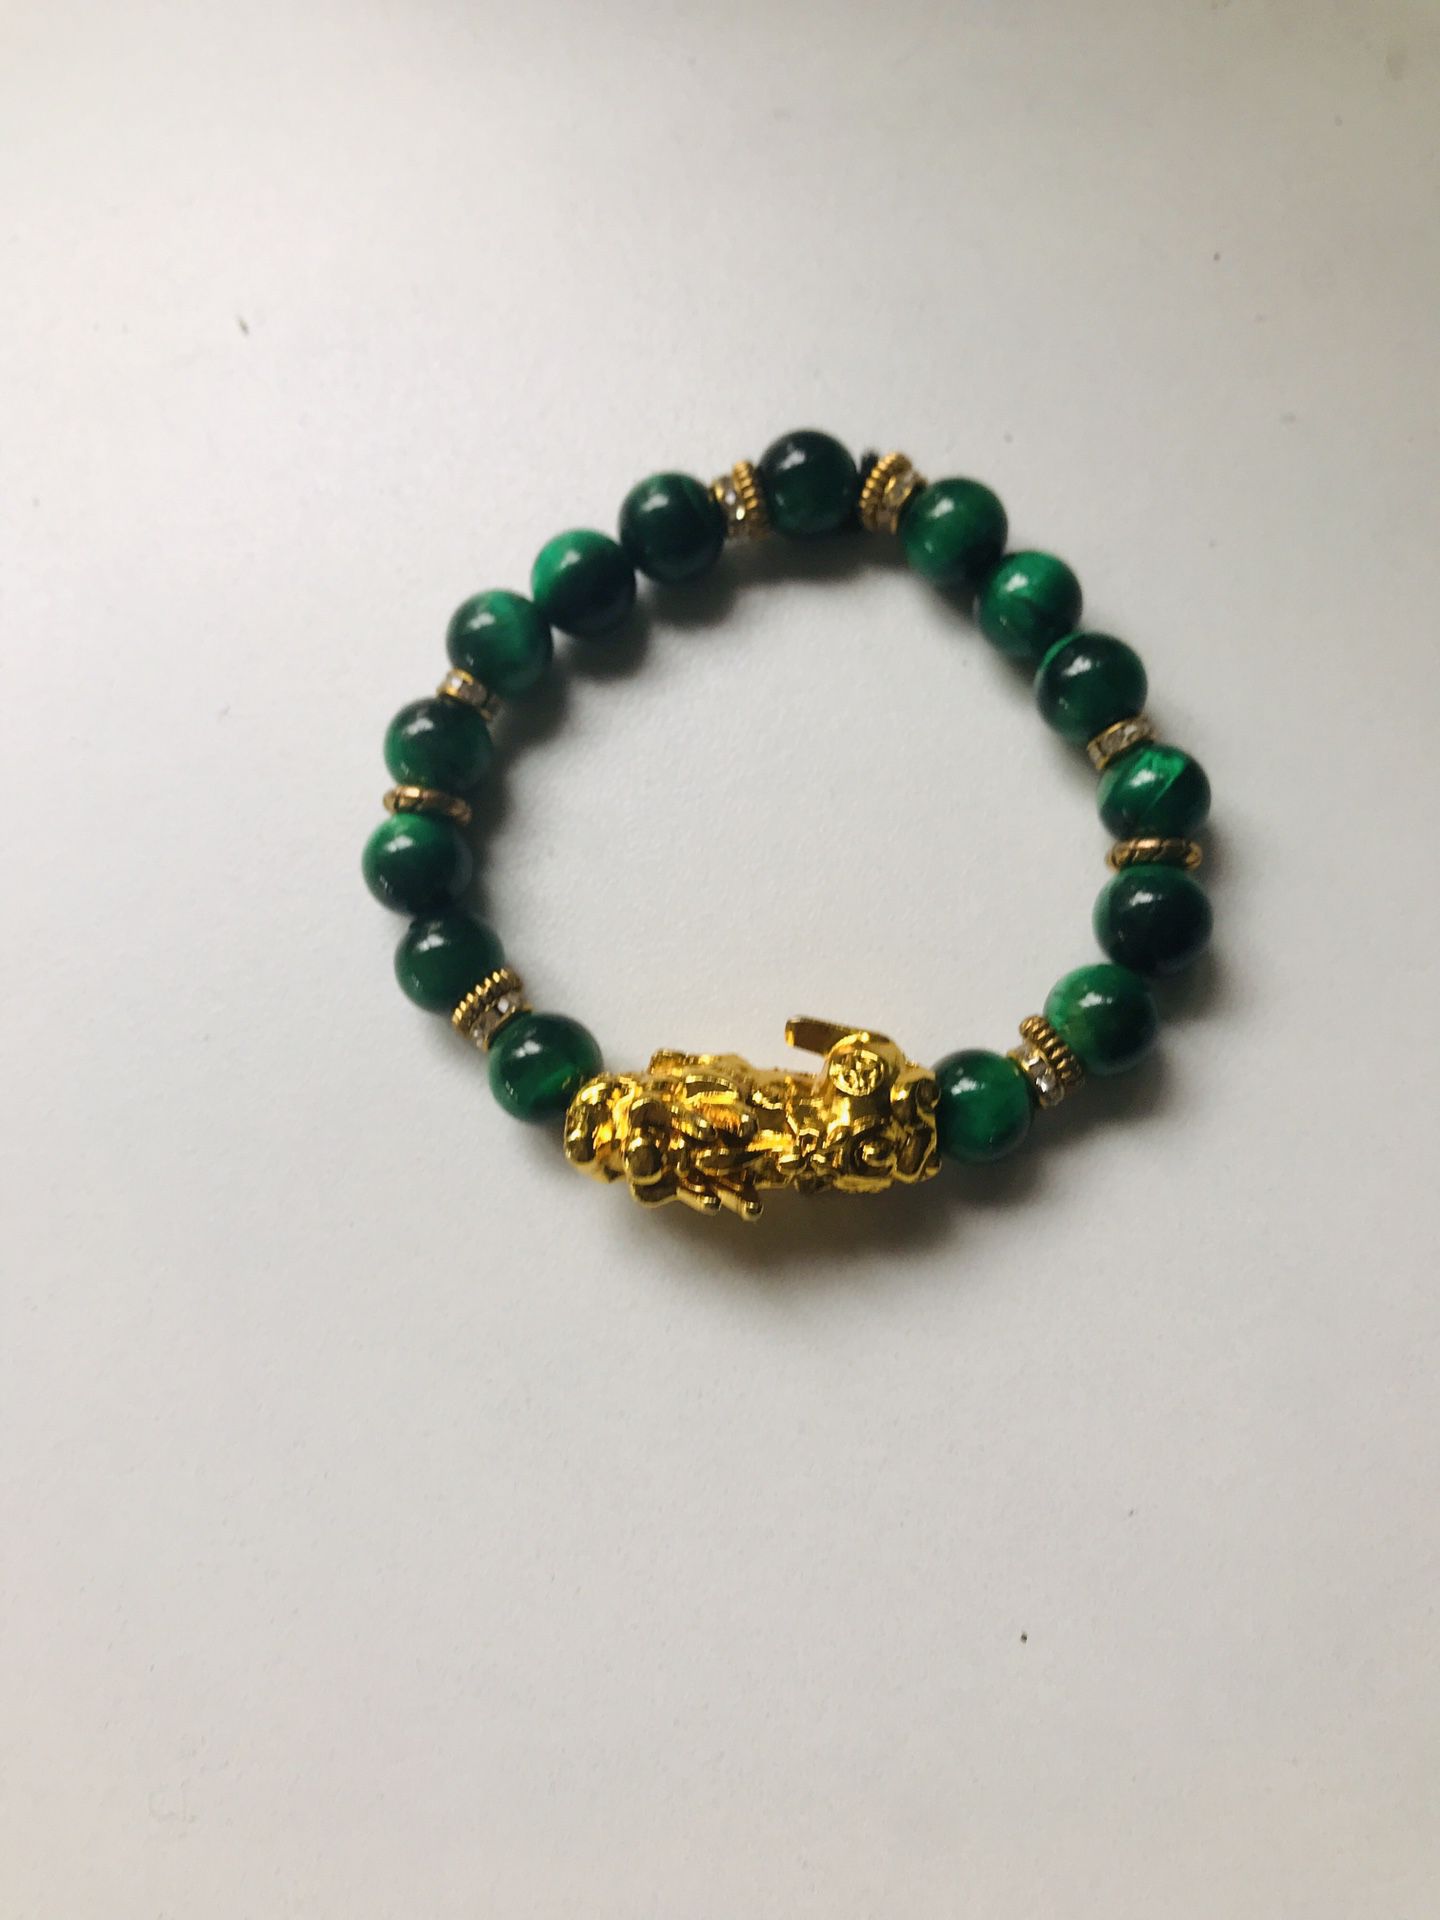 “Inspired by Rachel Ganz” Original designed Karma Bracelet in natural green malachite